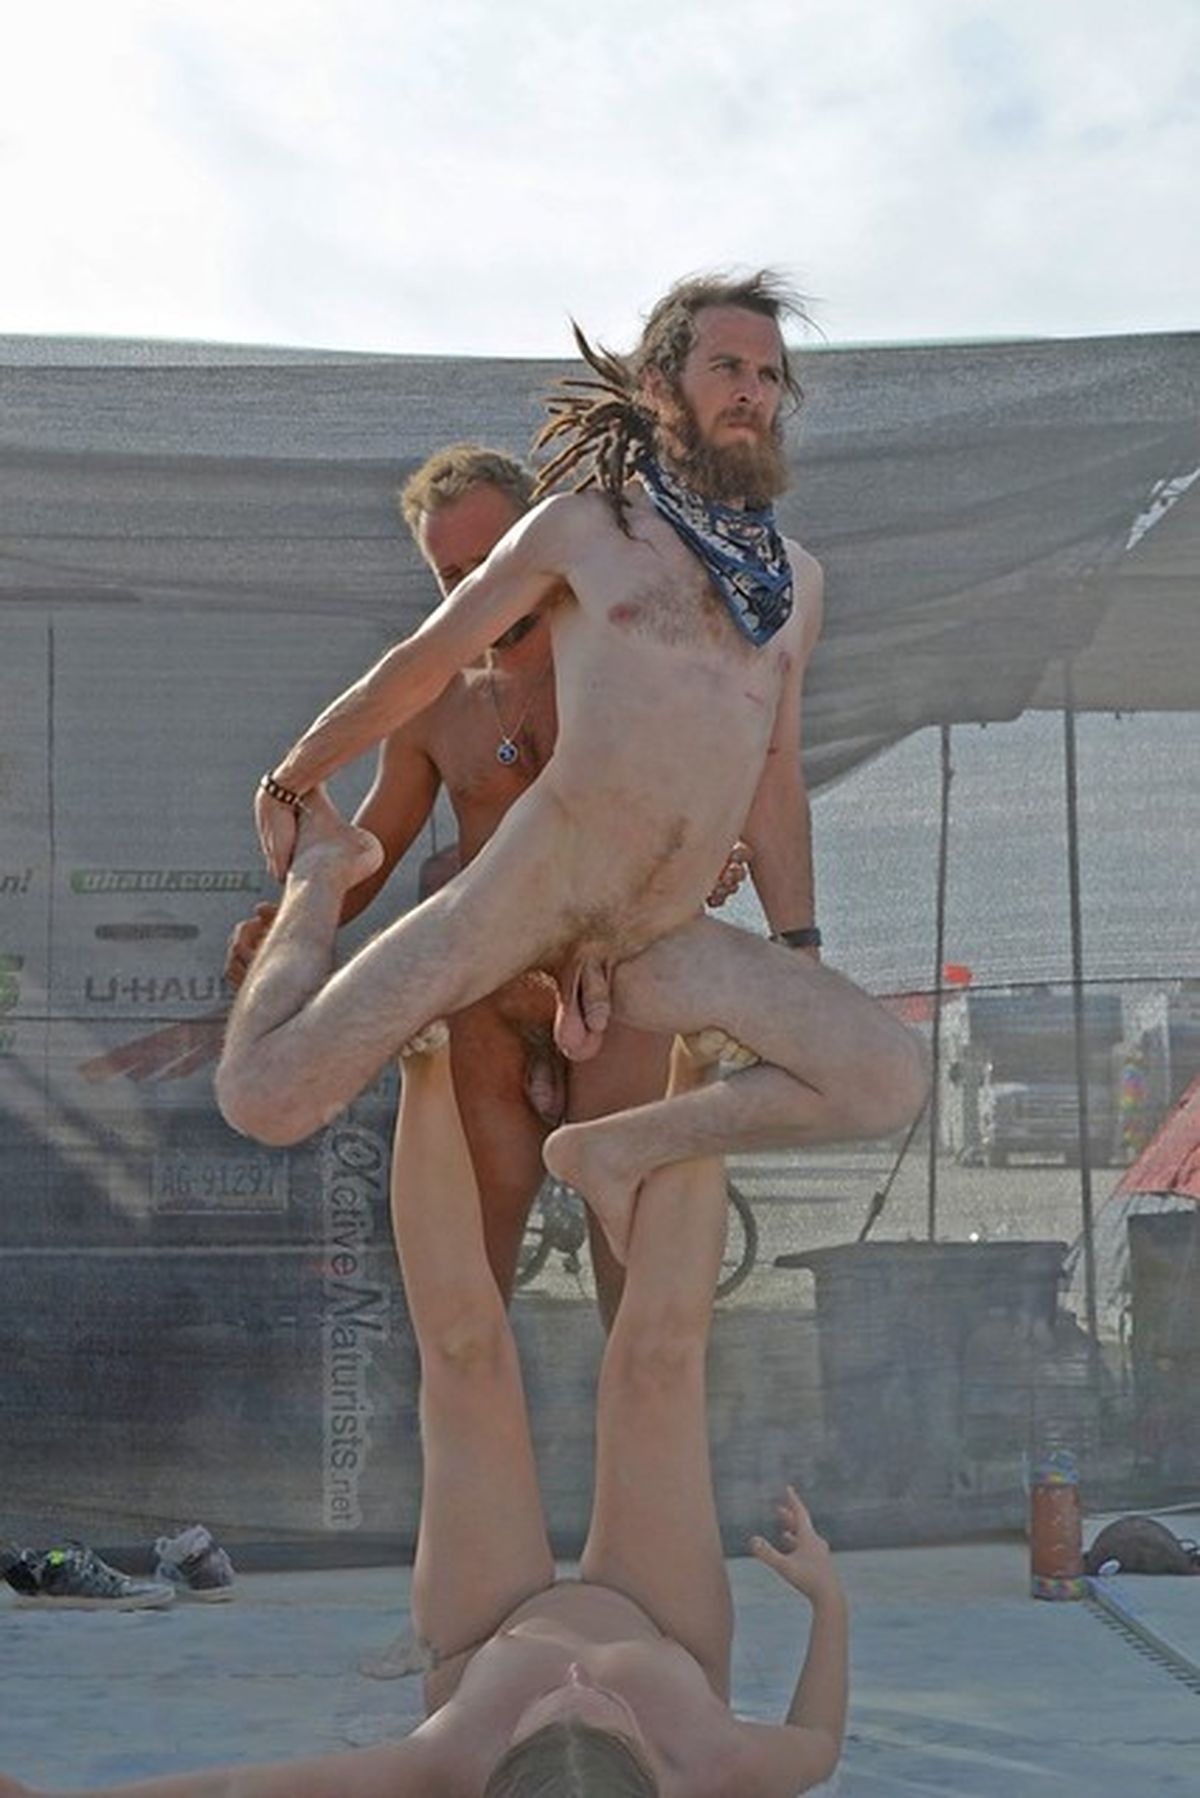 https://www.nudismlife.com/galleries/public_nudity/burning_man/active_naturists/active_naturists_037.jpg